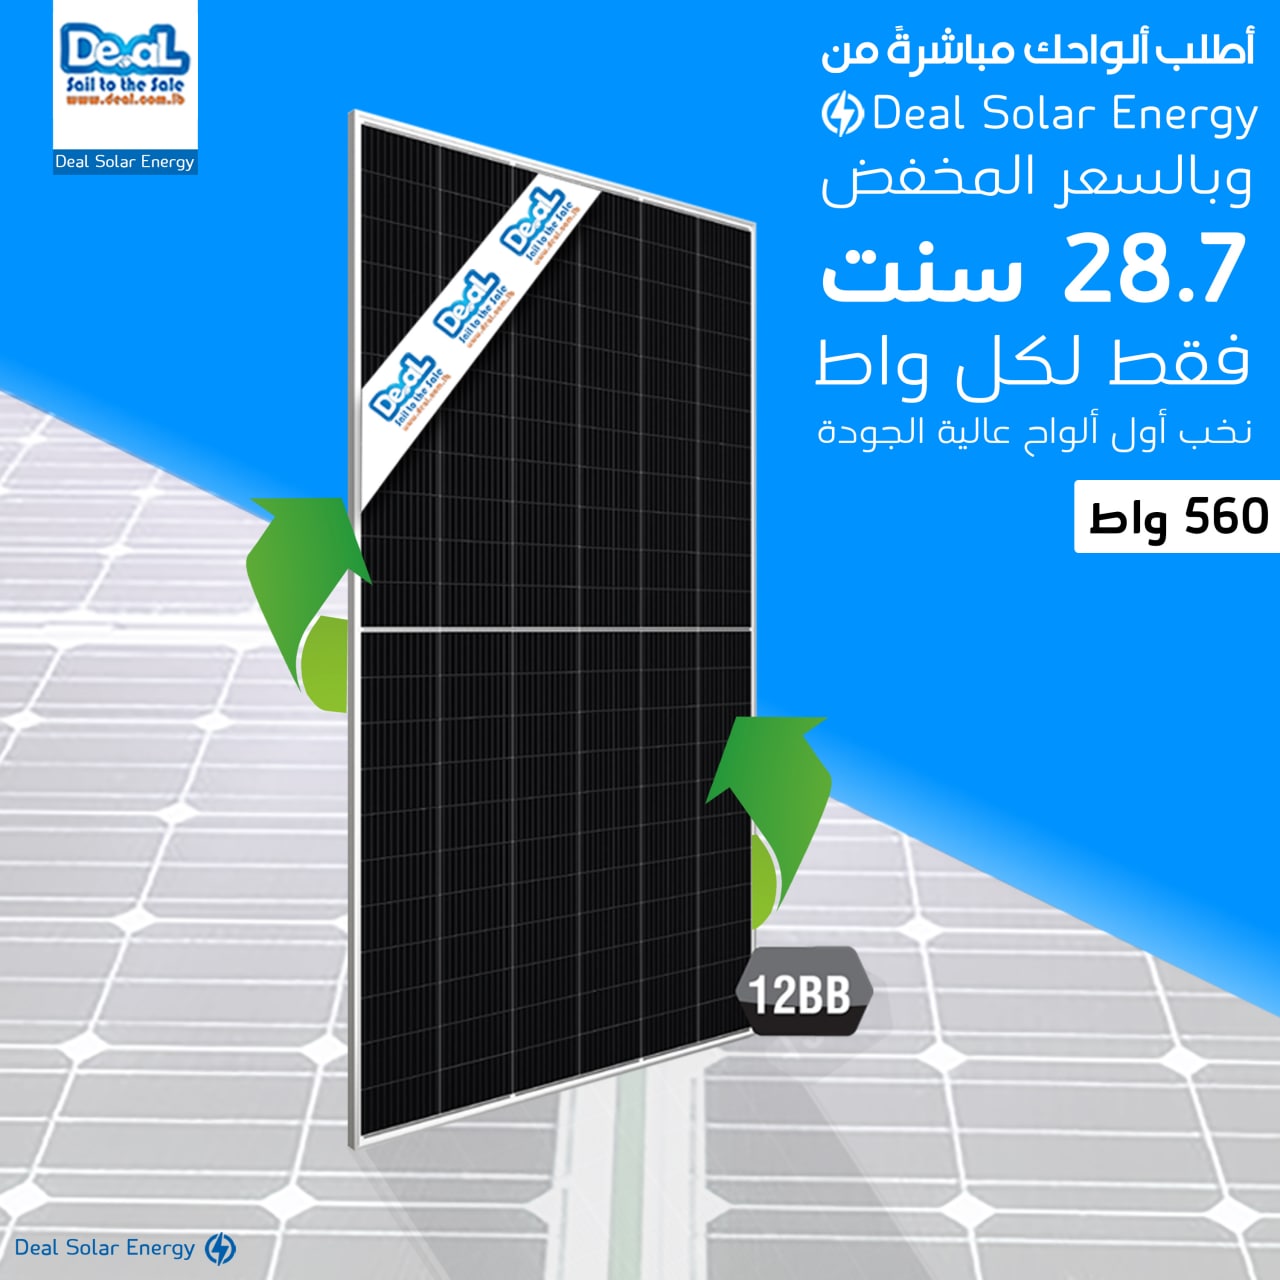 Deal Solar Energy High Efficiency Solar Panel ( Discount Price ) 560 Watts